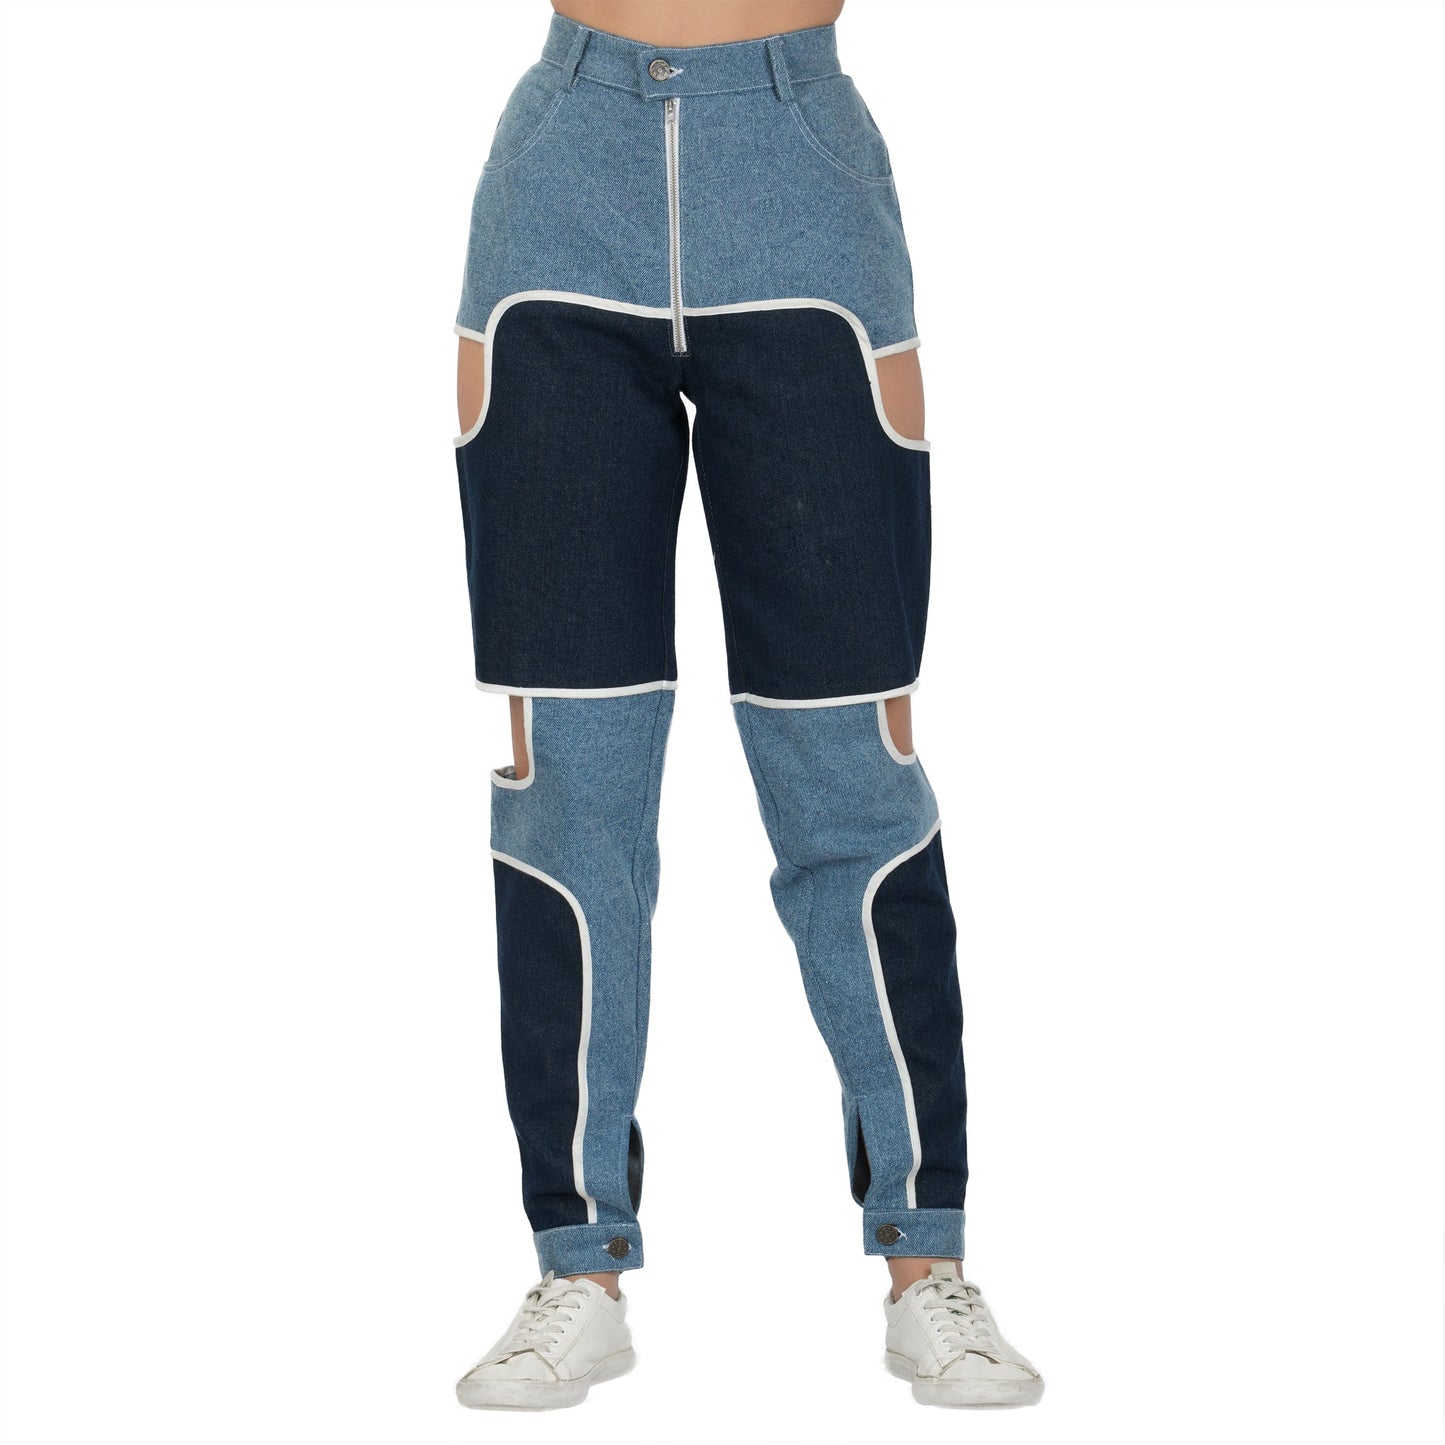 SLAY. Women's Blue & White Colorblock Denim Jeans & Crop top Co-ord Set